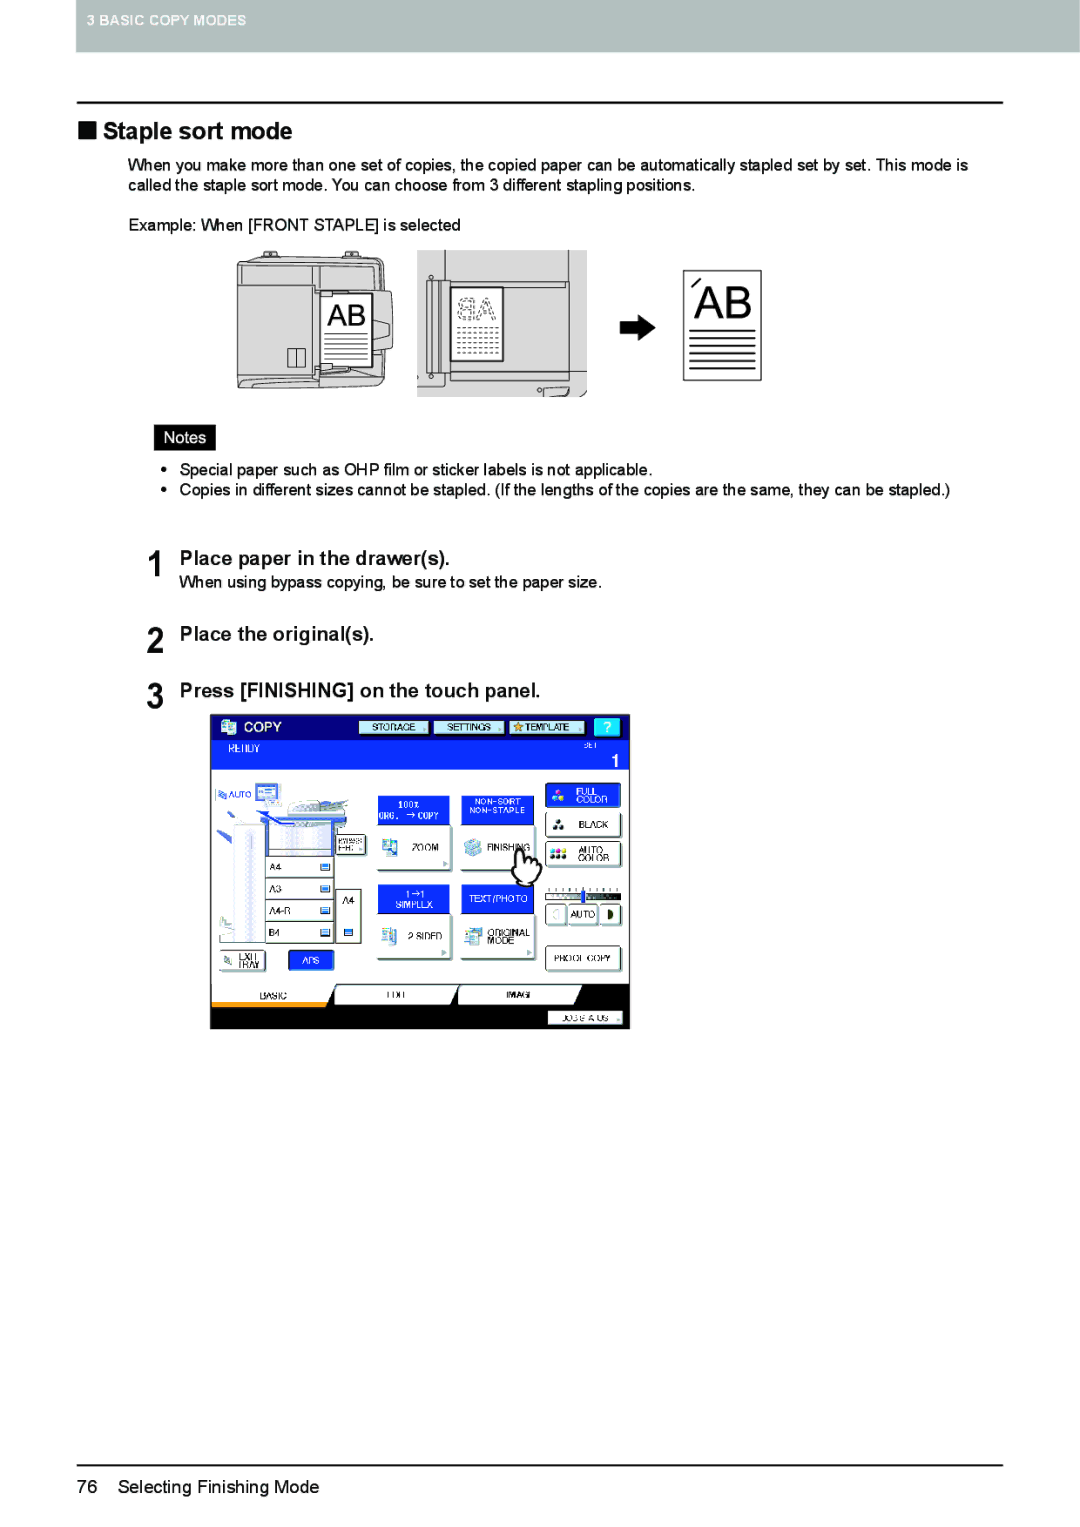 Toshiba 6520c, e-STUDIO5520C manual „ Staple sort mode, Place the originals Press Finishing on the touch panel 